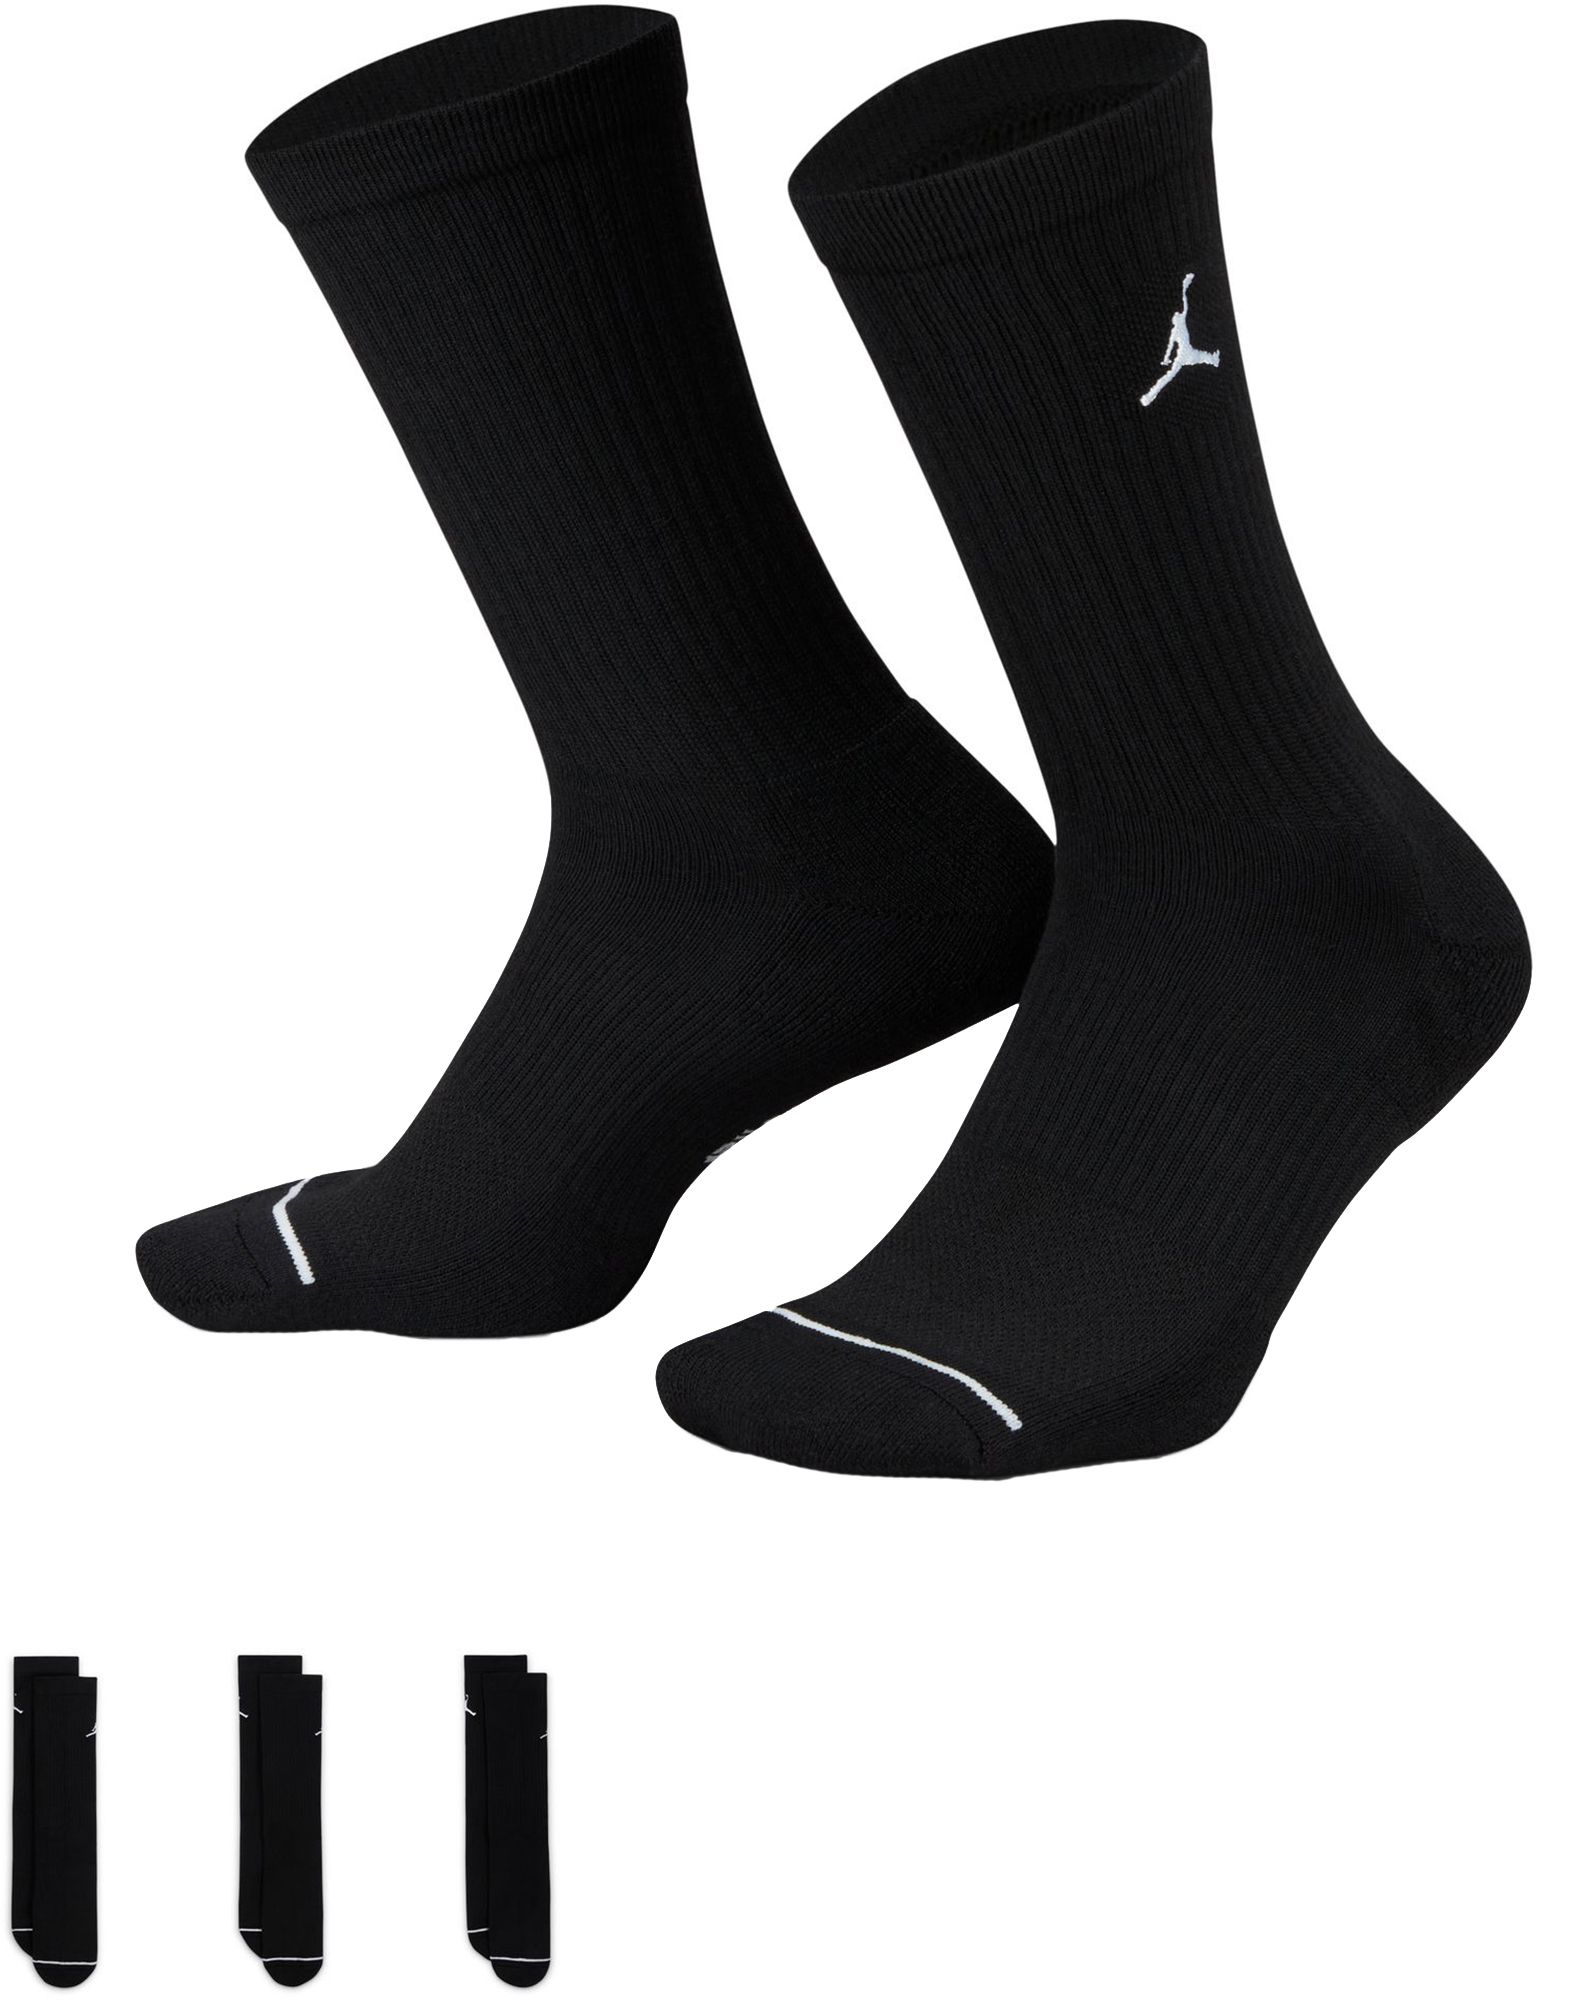 Jordan Everyday Crew Socks - 3 Pack